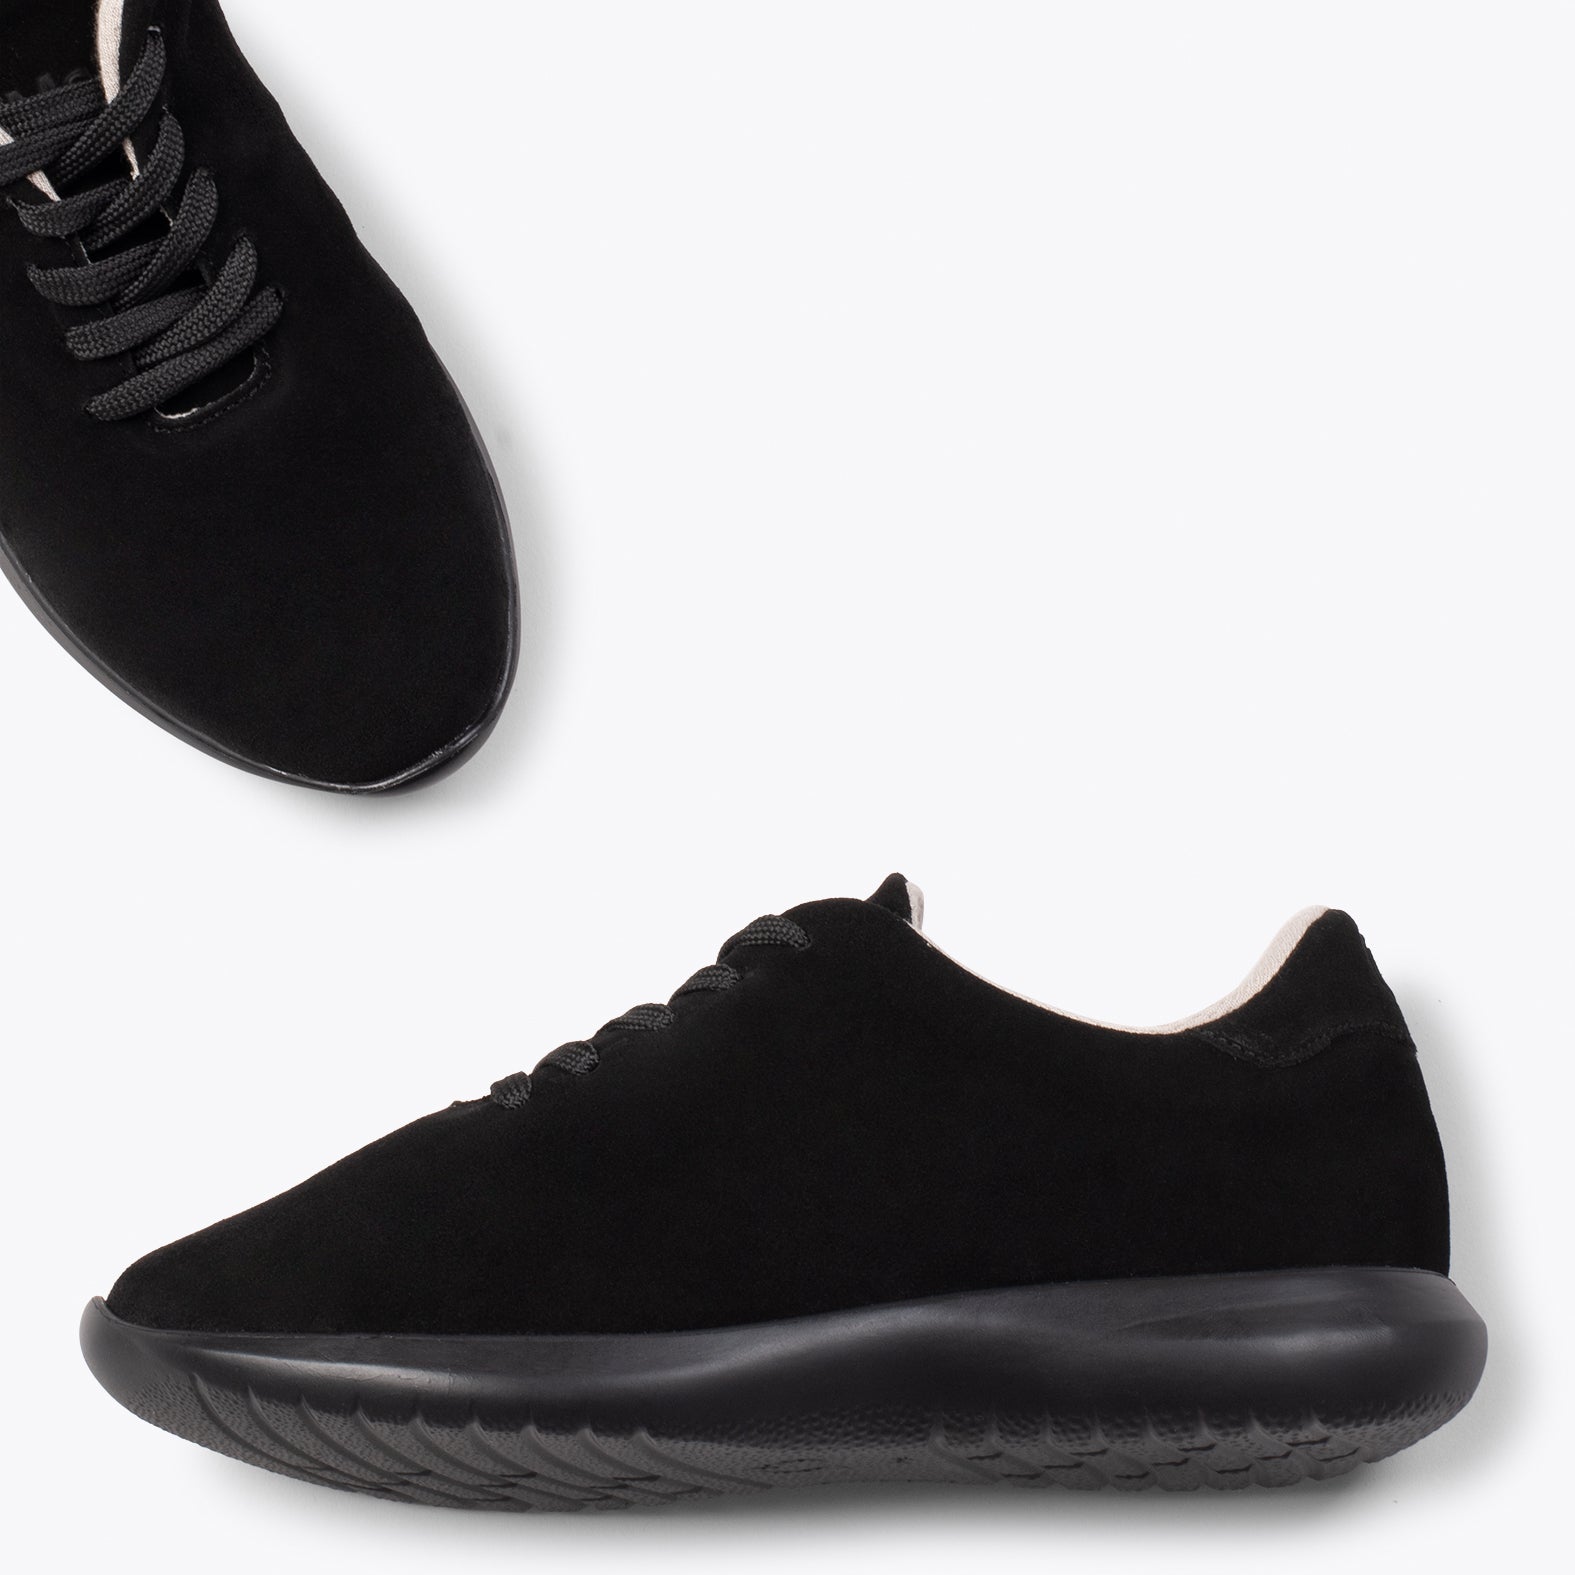 WALK – TOTAL BLACK comfortable women’s sneakers